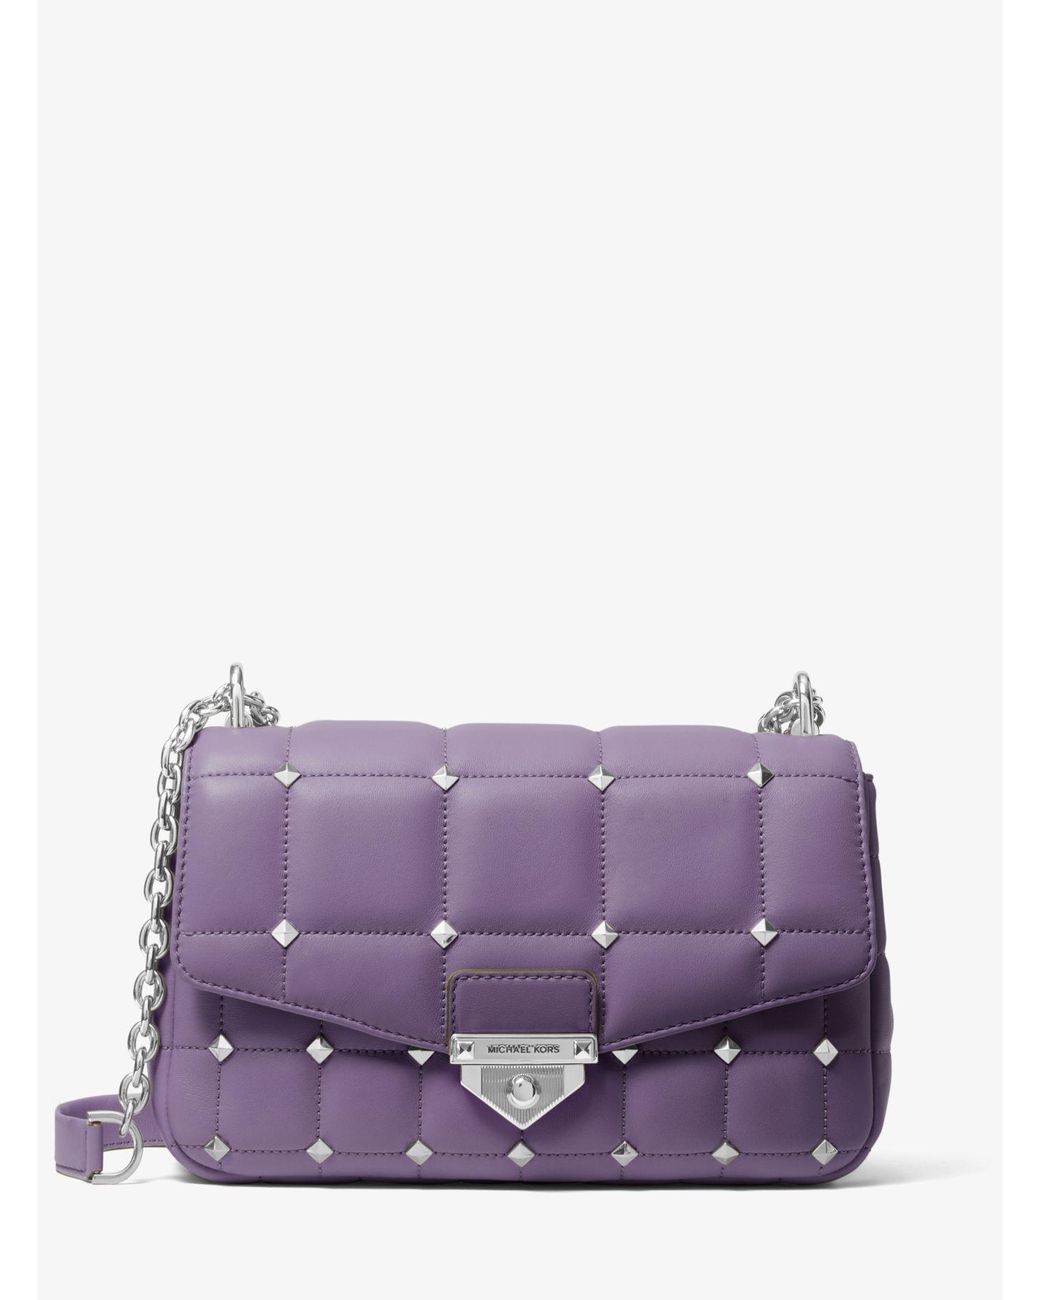 Michael Kors Soho Large Studded Quilted Leather Shoulder Bag in Purple ...